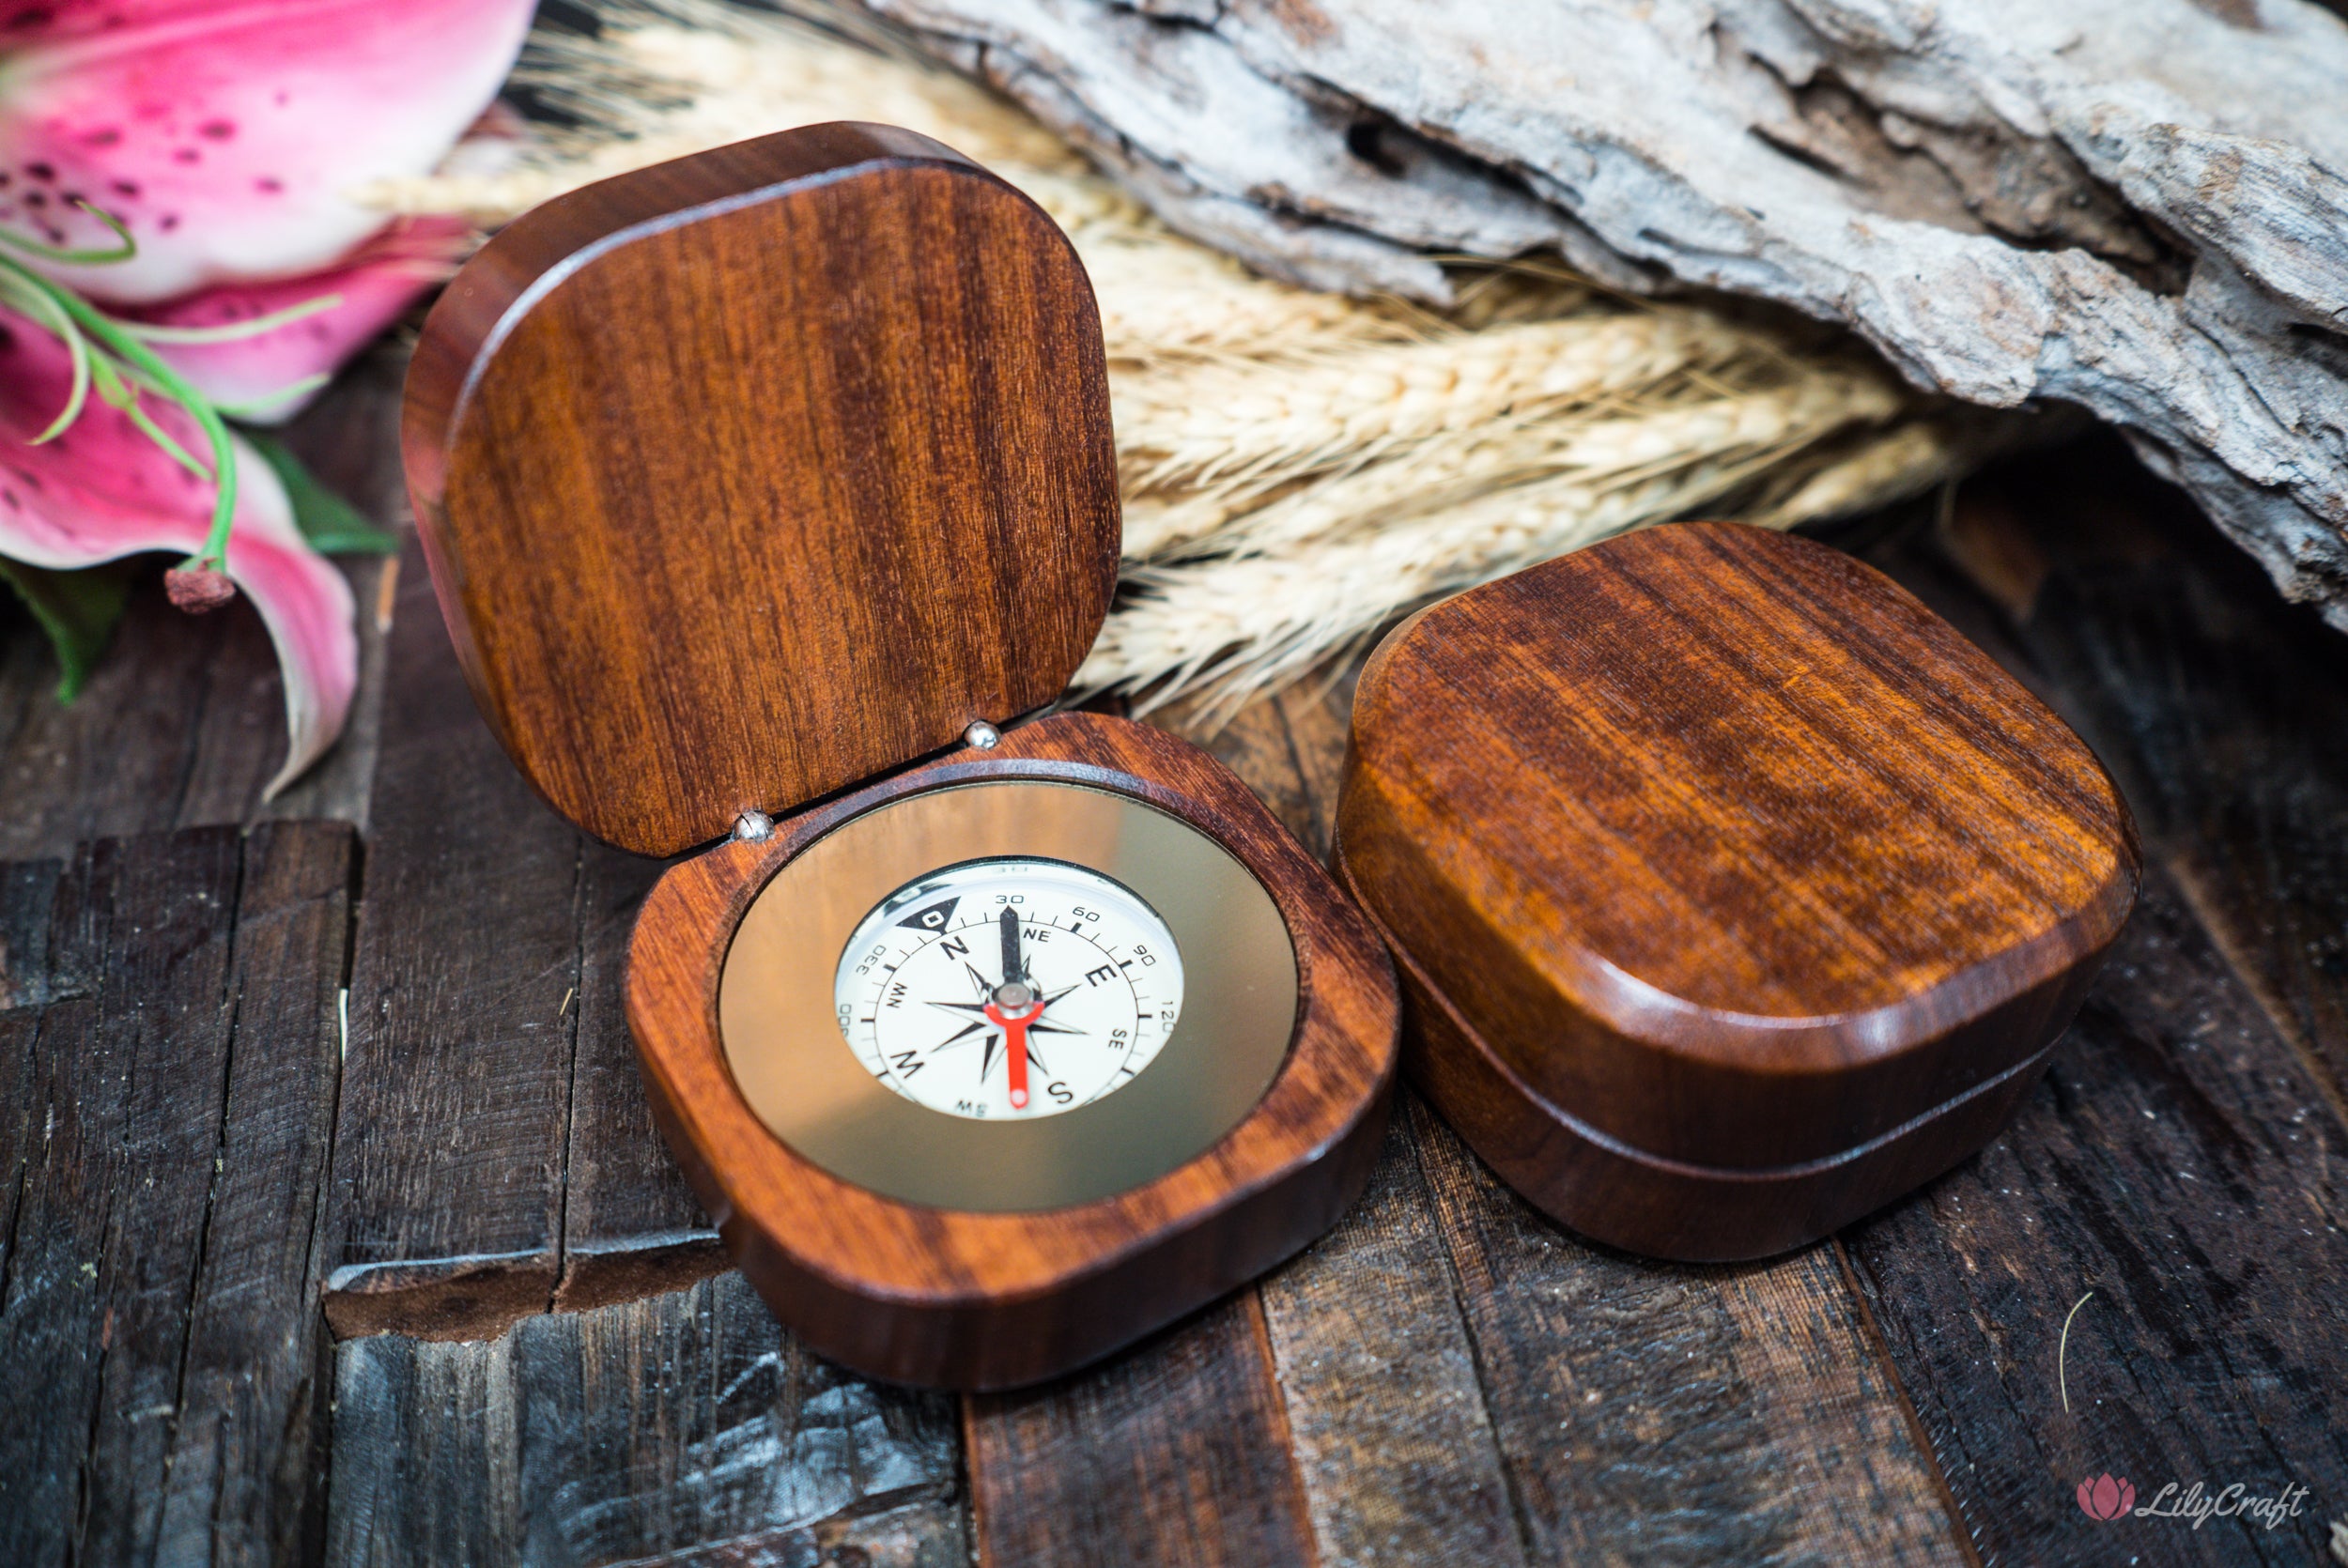 Custom engraved wooden compass for outdoor enthusiasts burdekin plum lilycraft